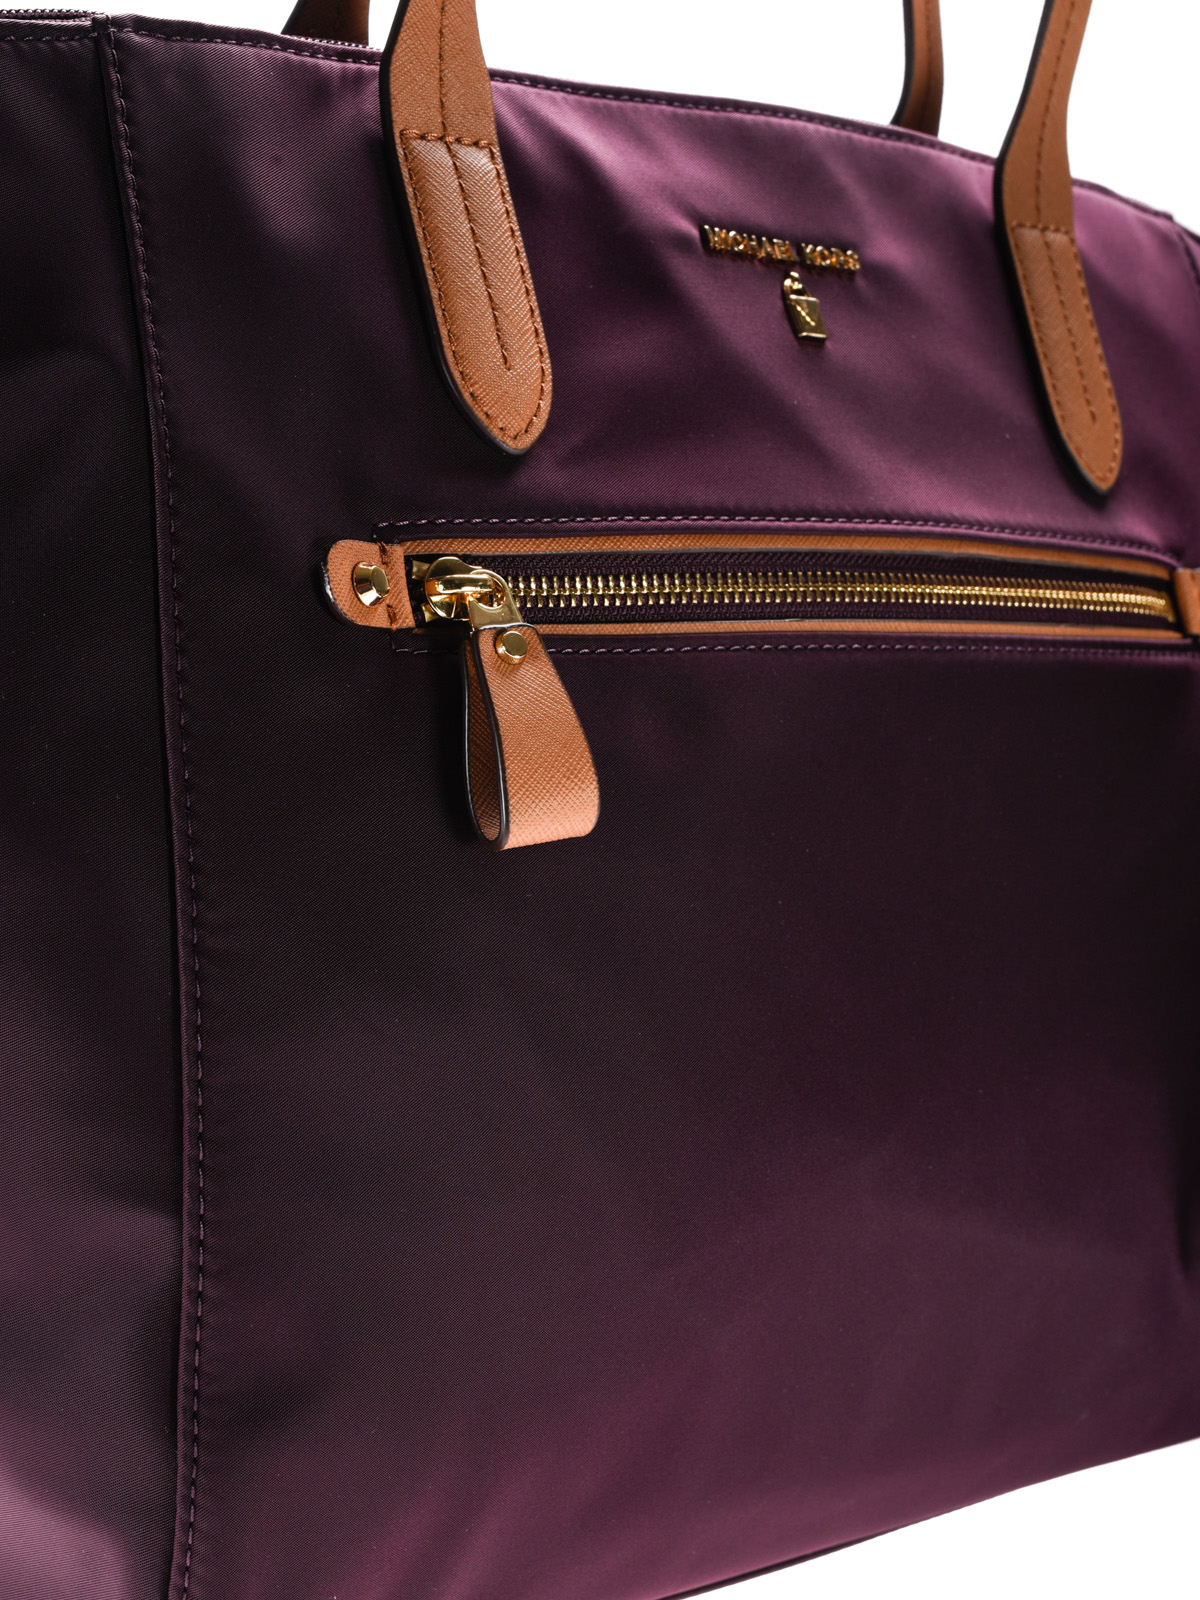 Michael Kors Purple Tote Bags